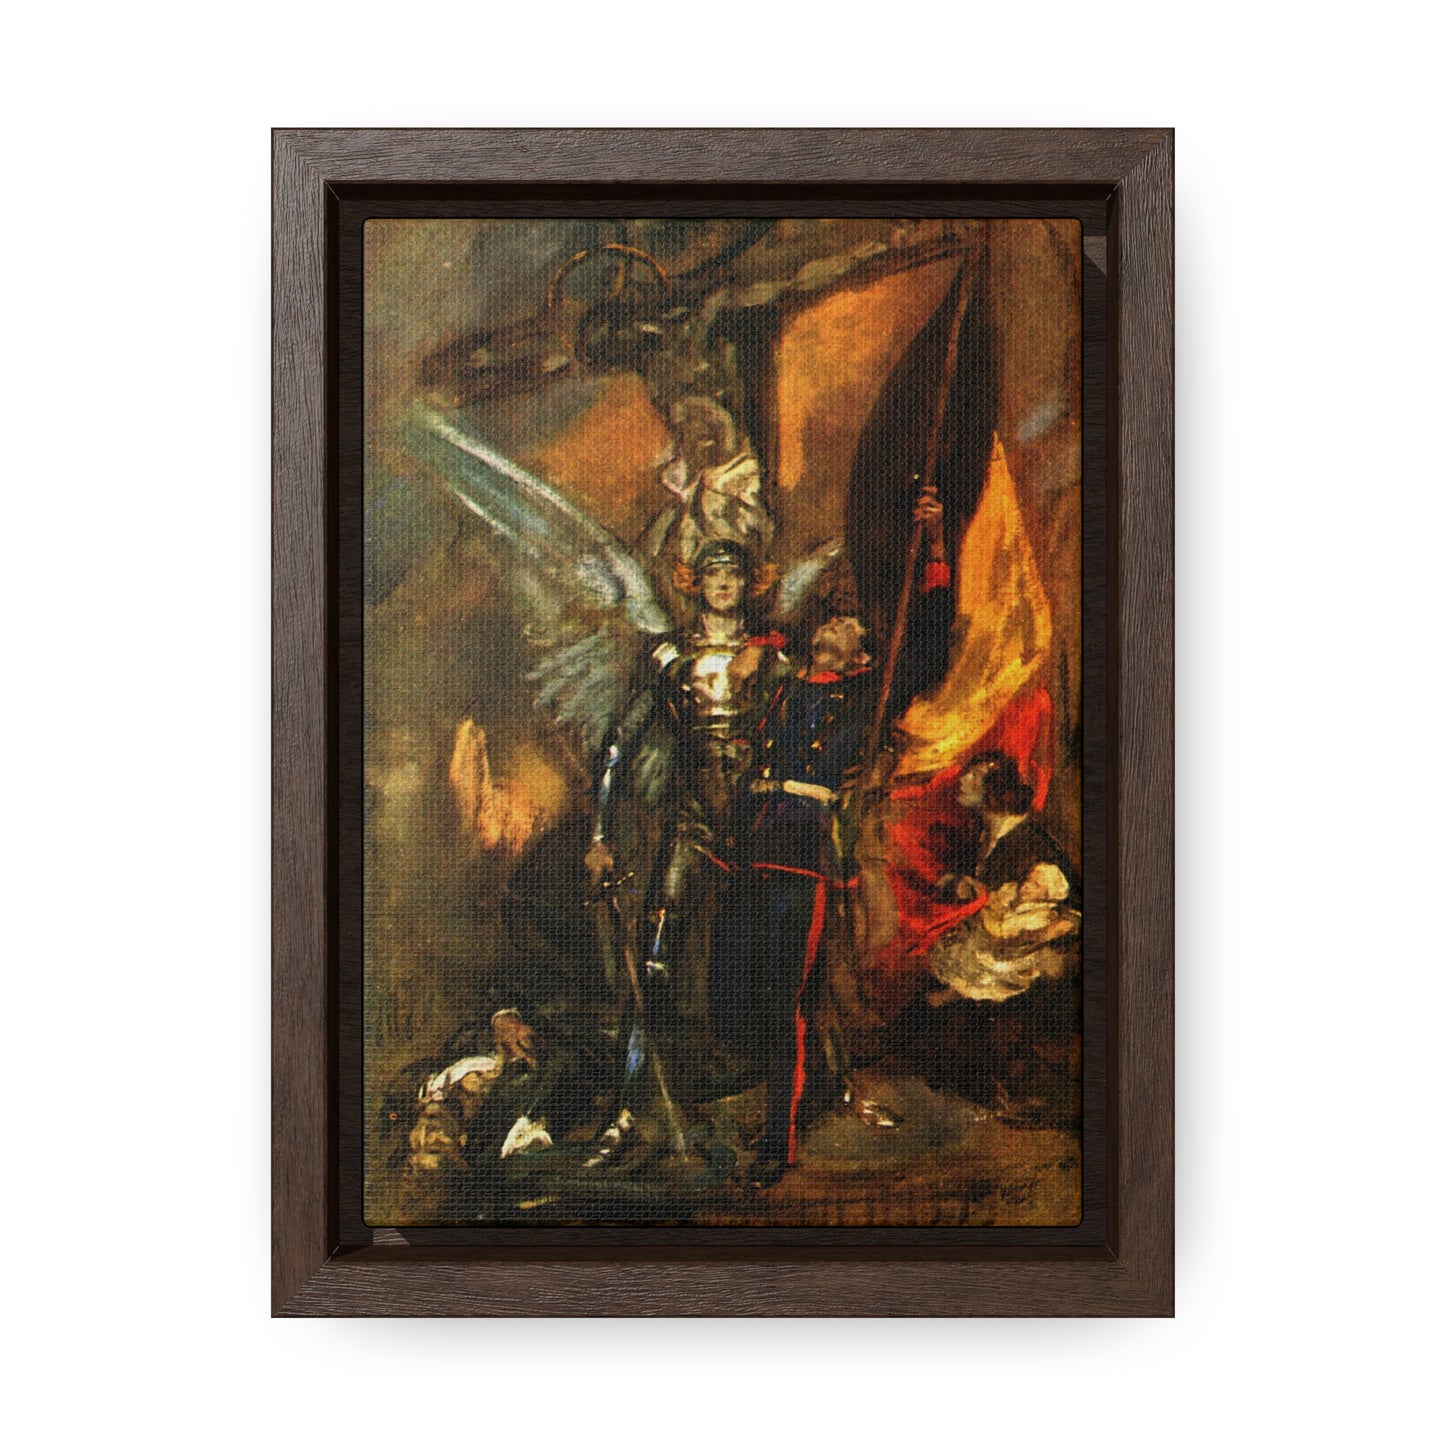 St. Michael of Belgium Framed Canvas - Sanctus Art Gallery